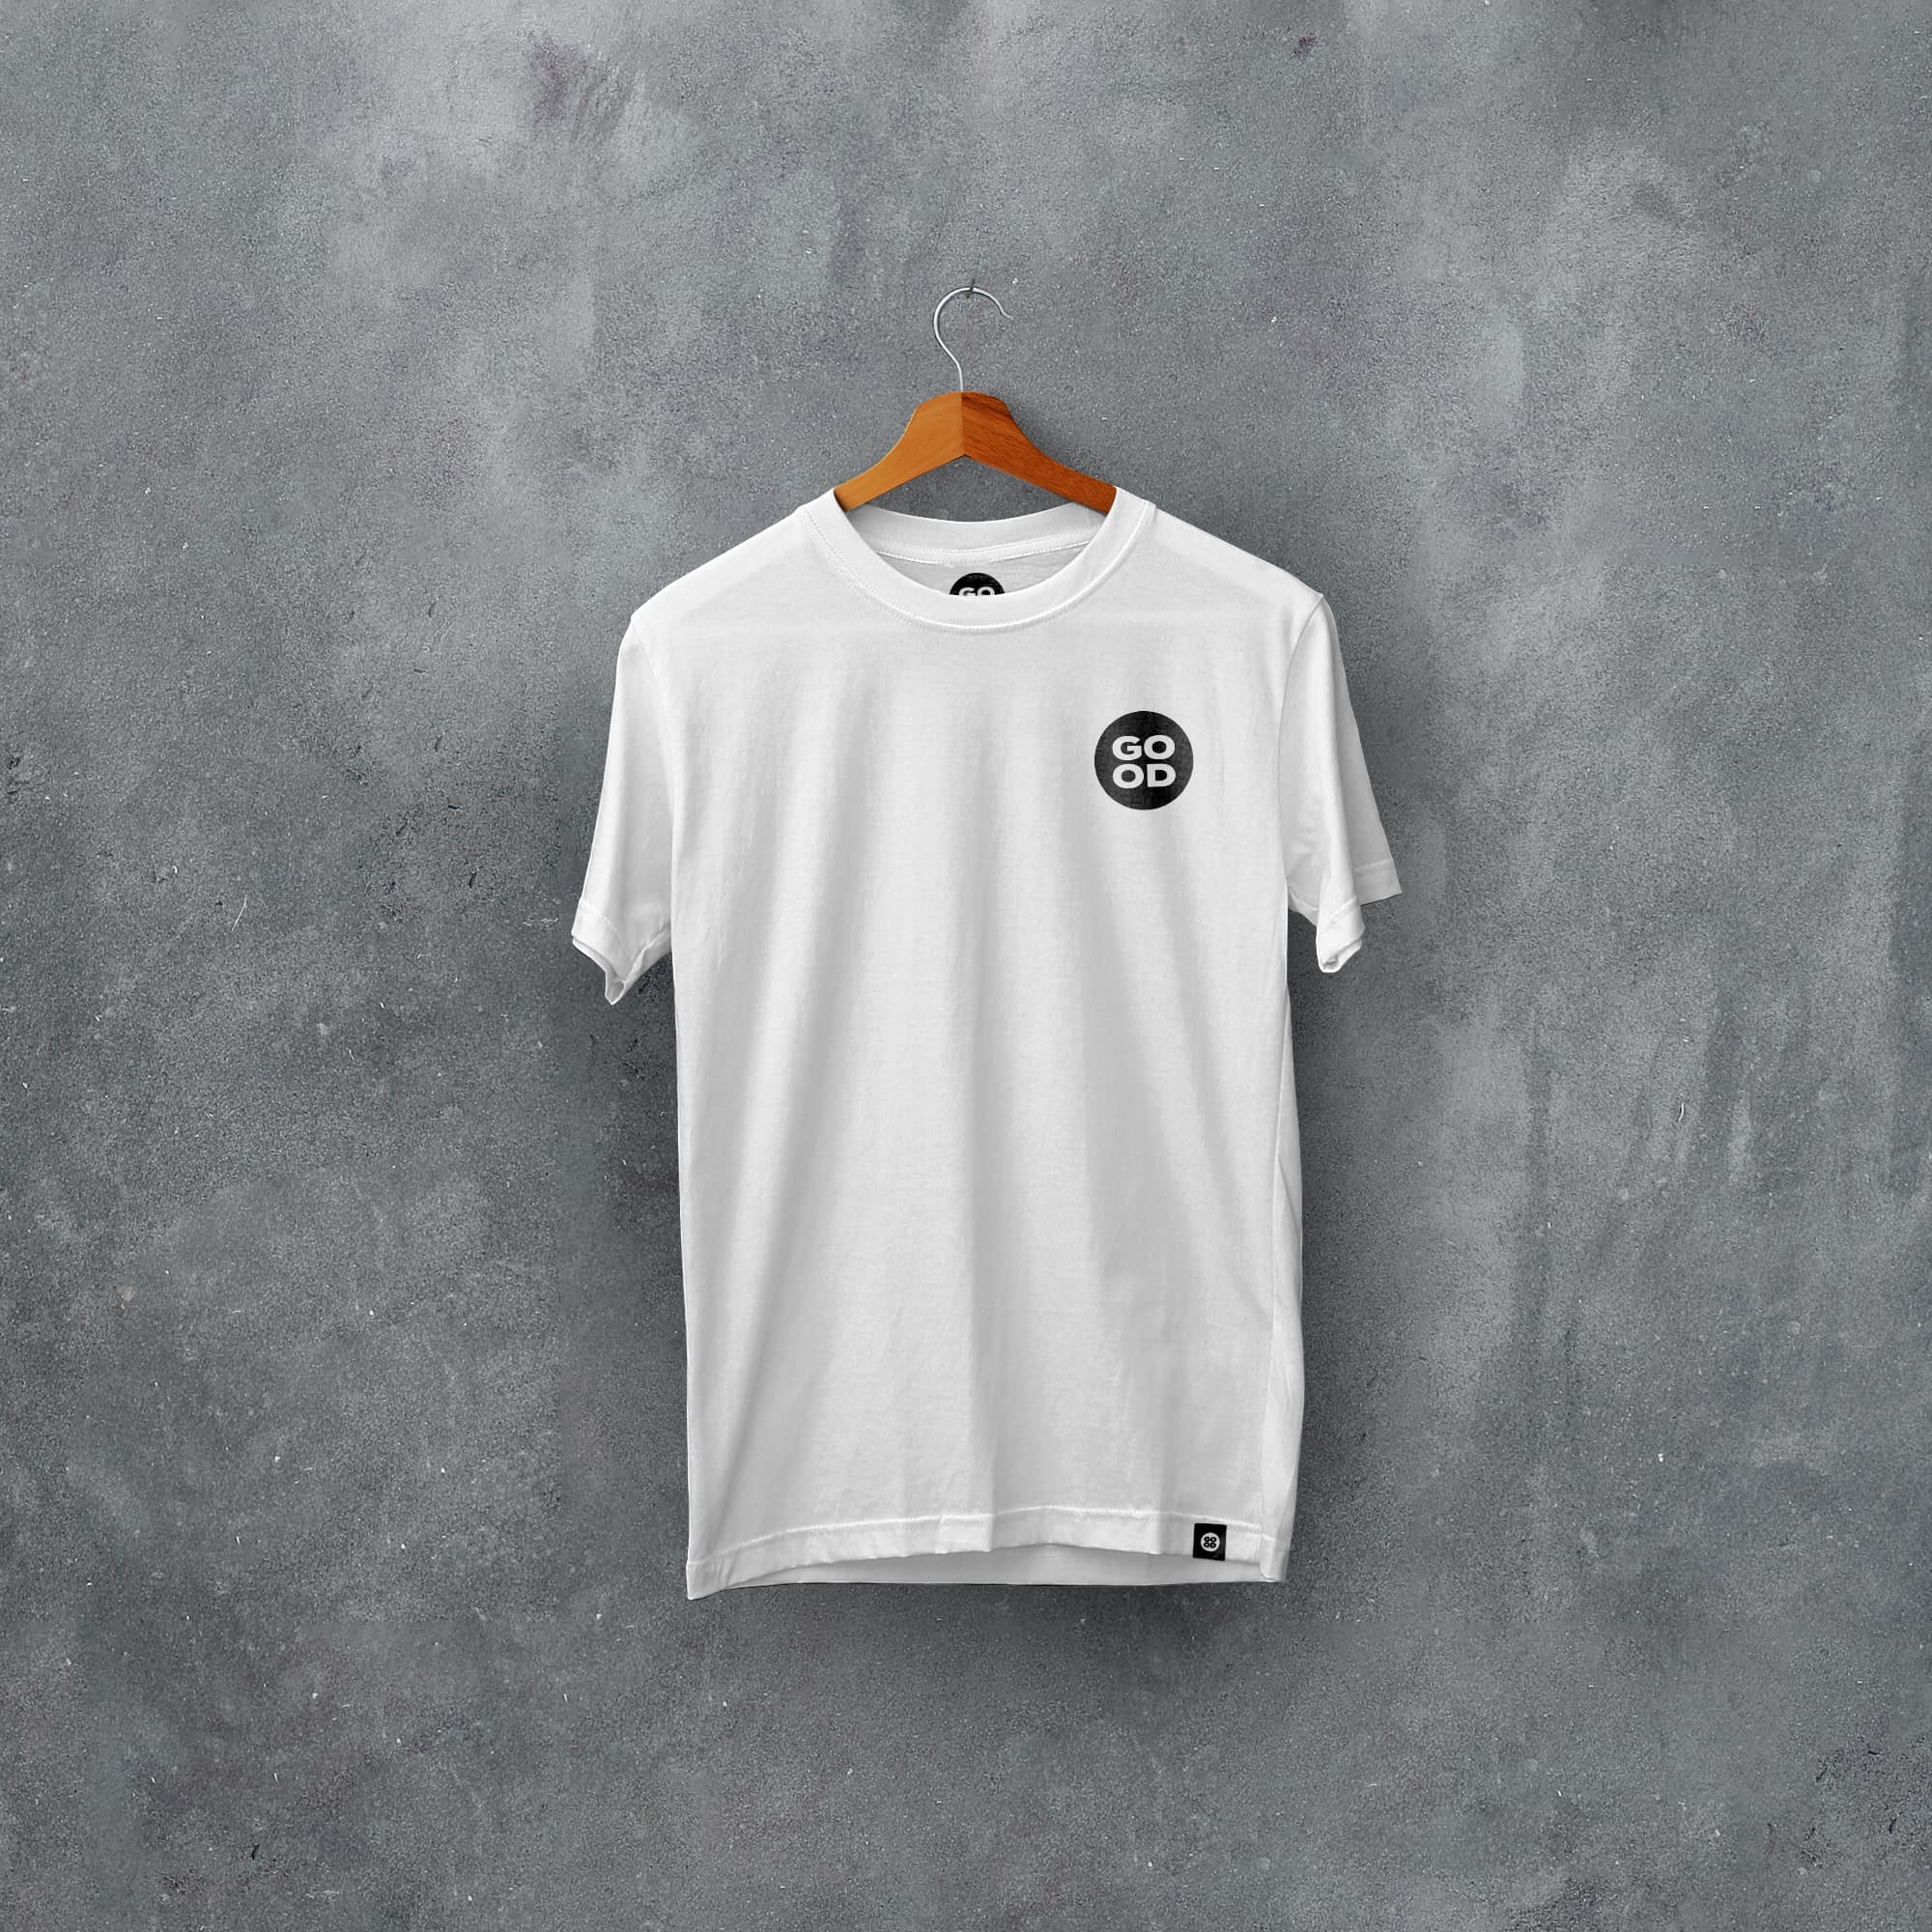 Inter Classic Kits Football T-Shirt